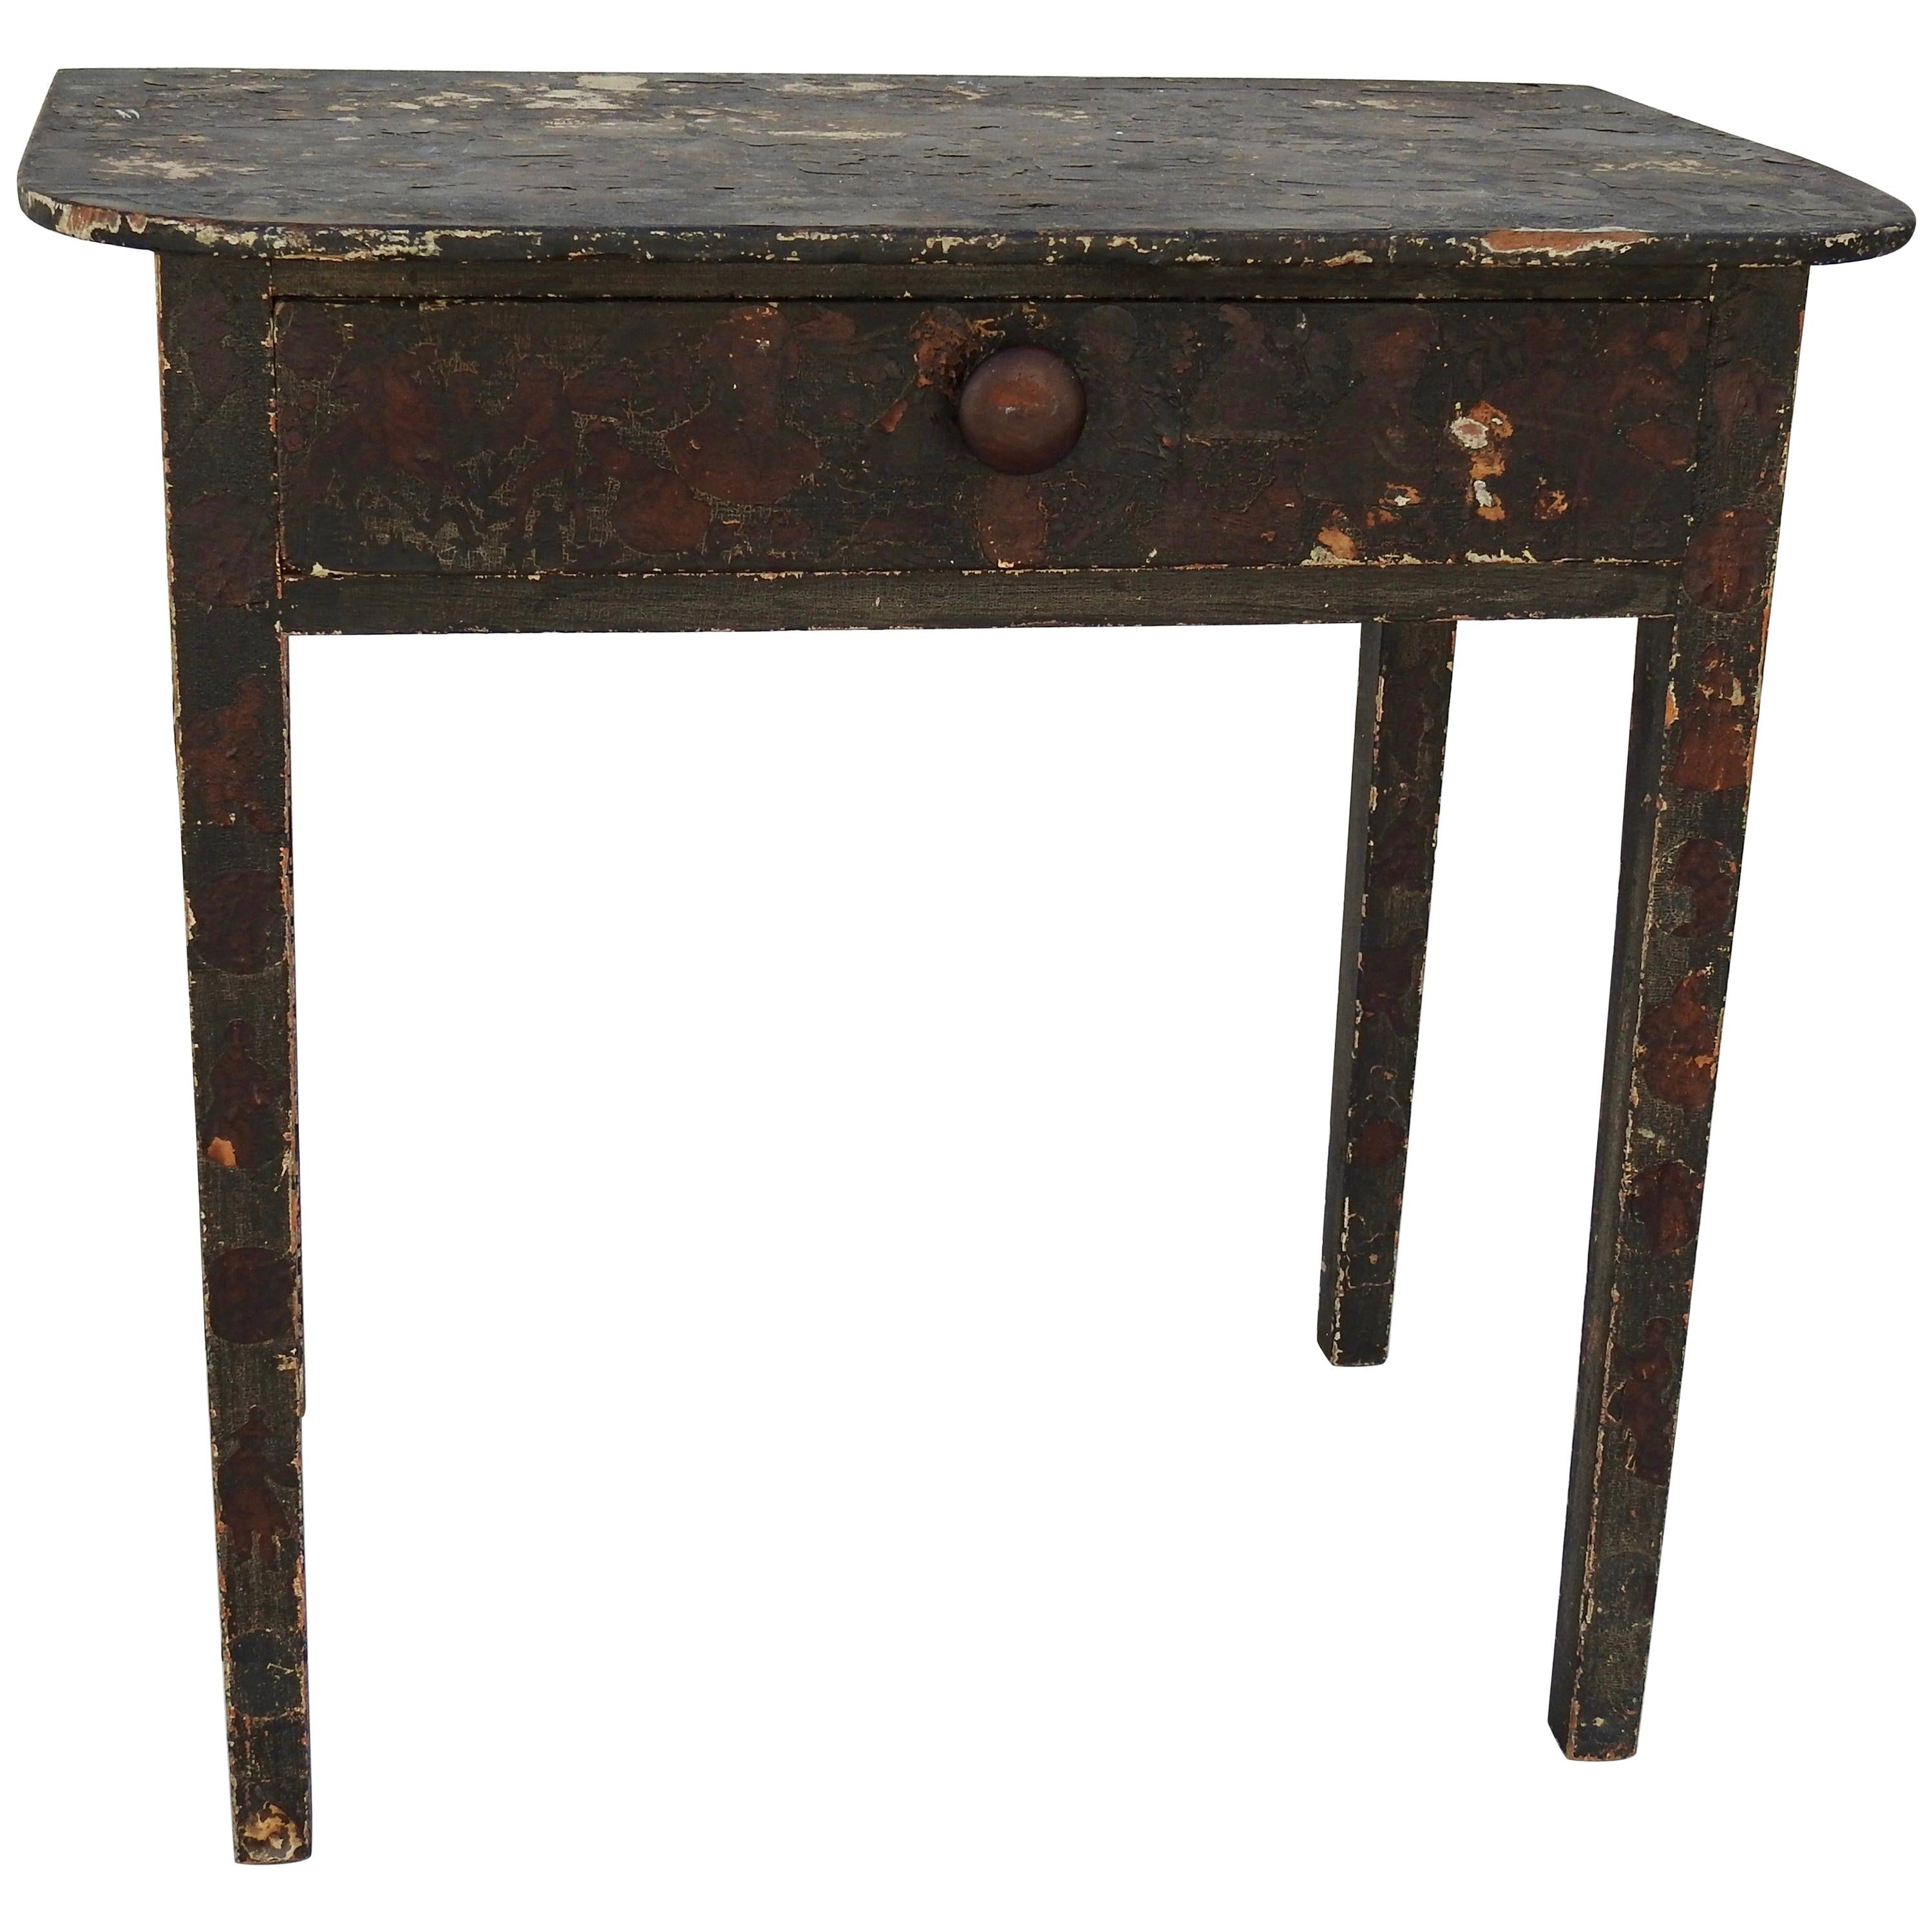 Primitive Folk Art Decoupage Work Table, 19th Century